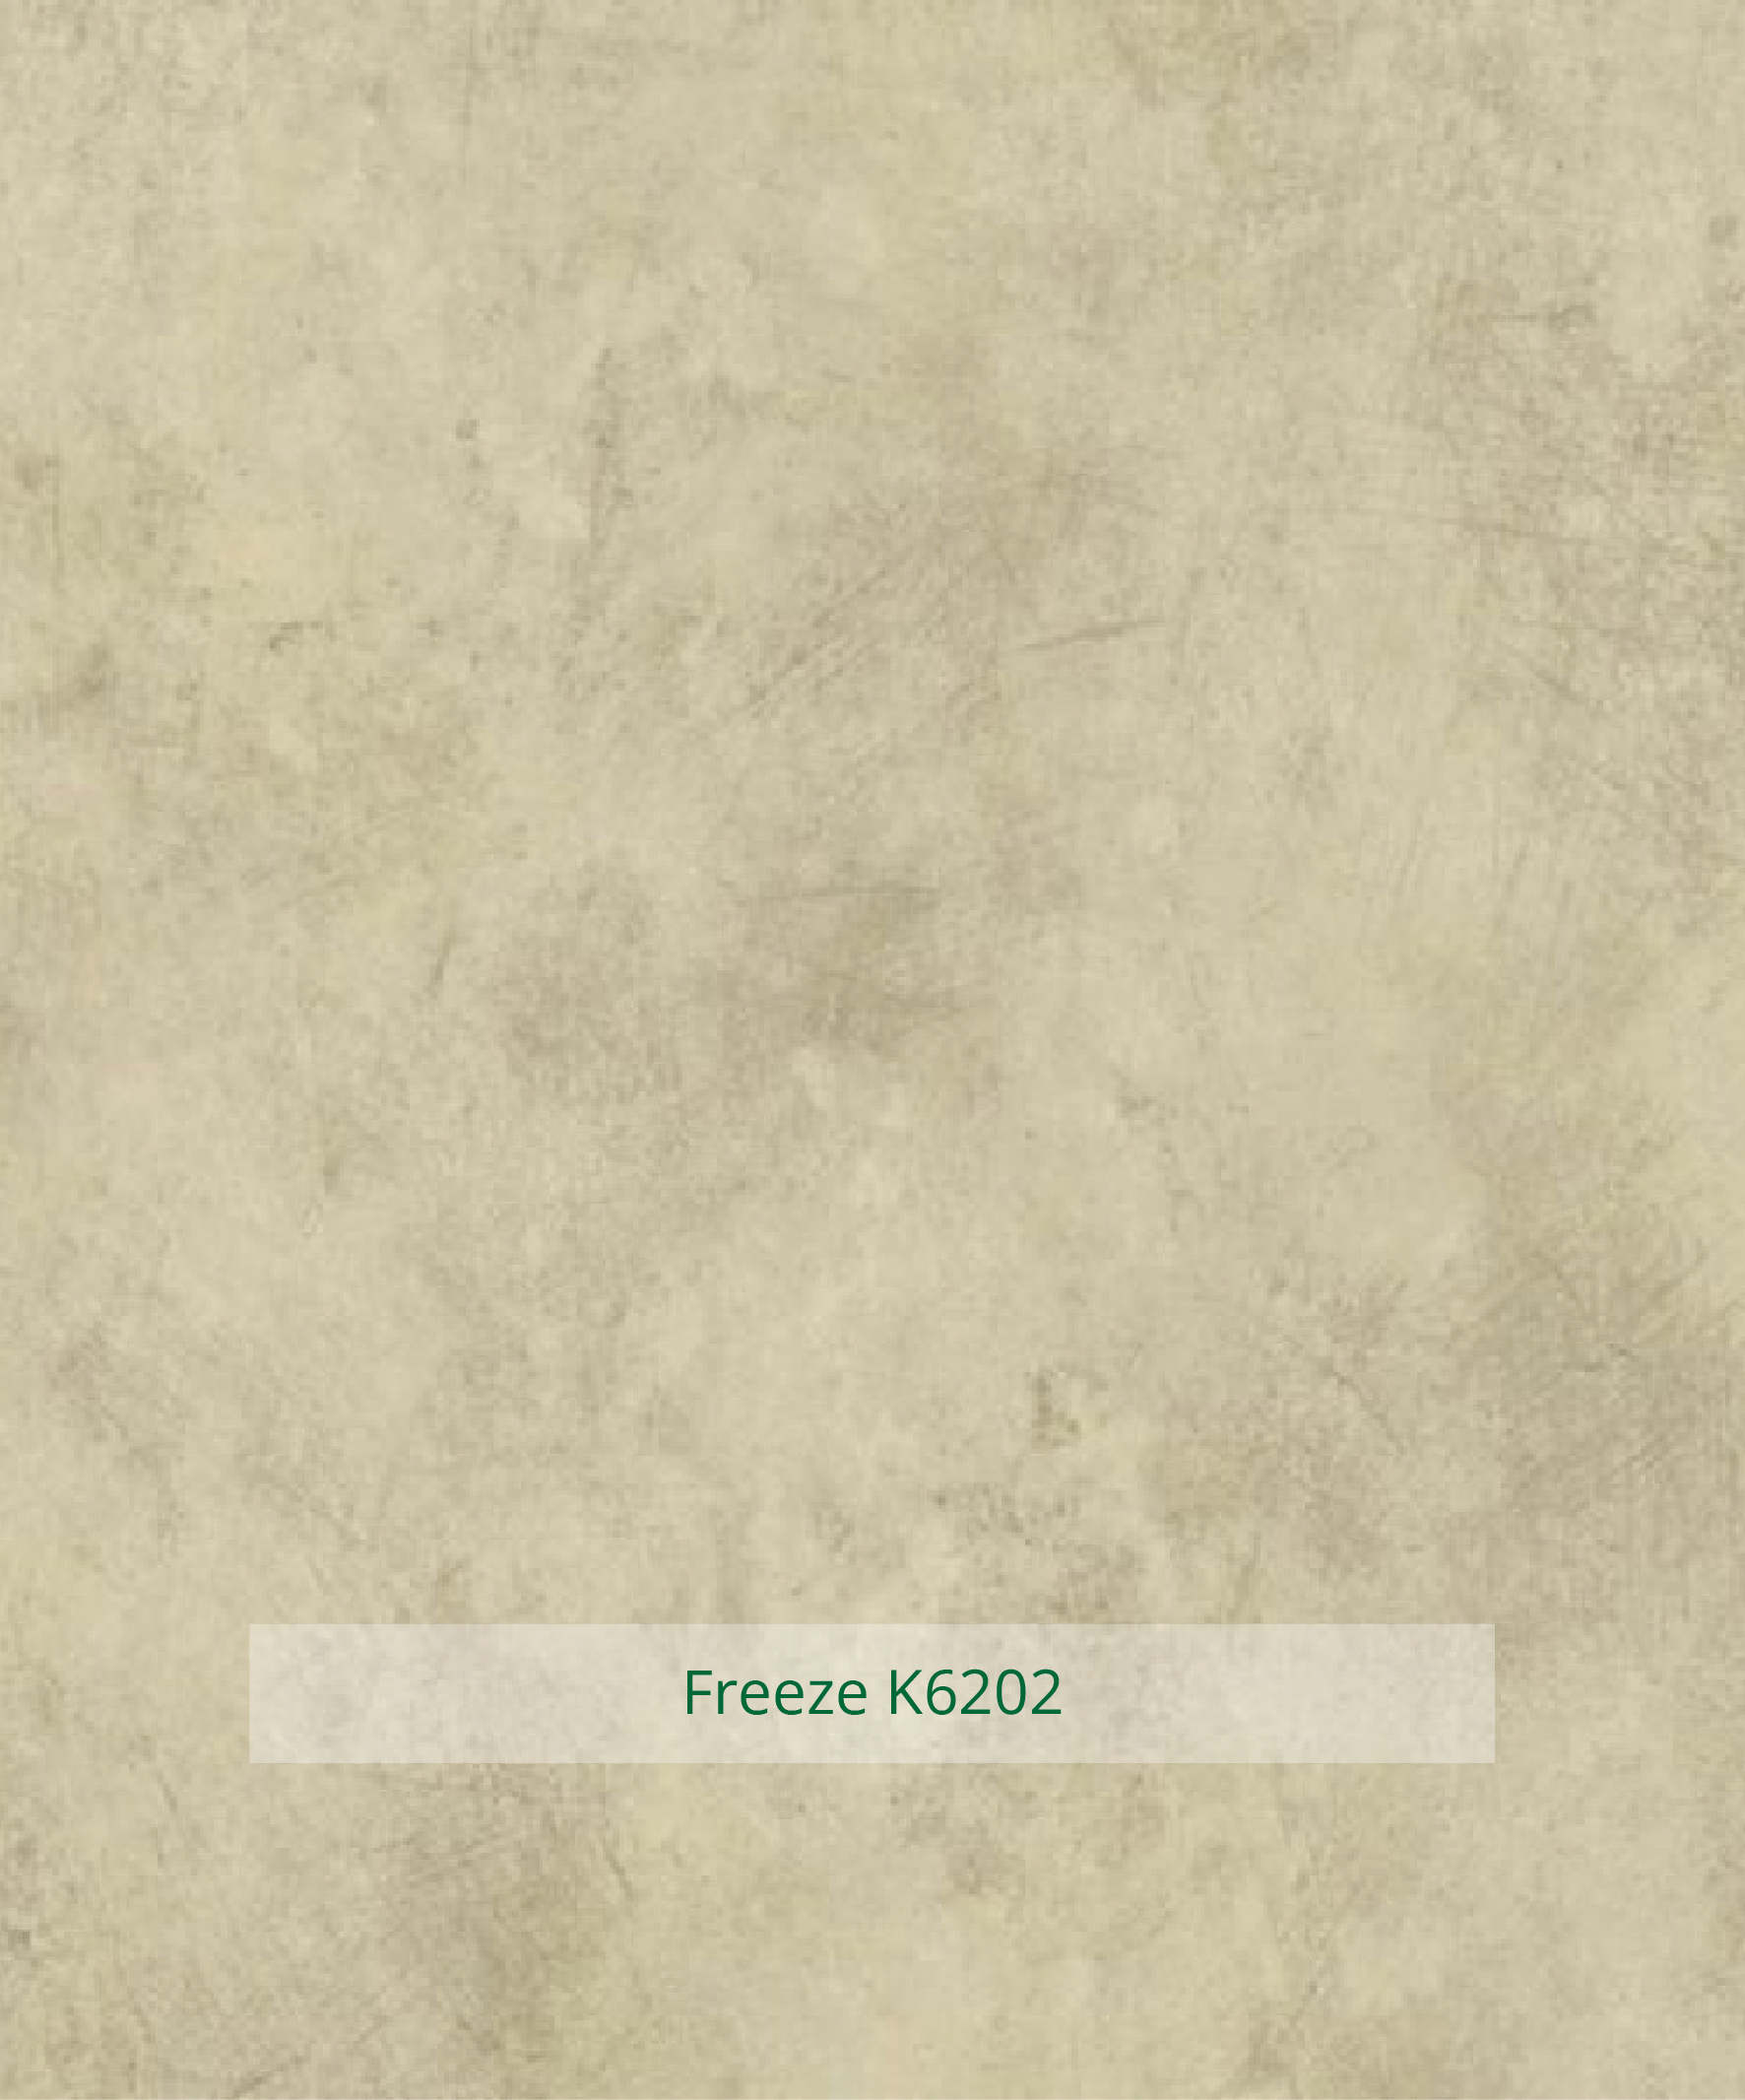 Timberline Freeze K6202